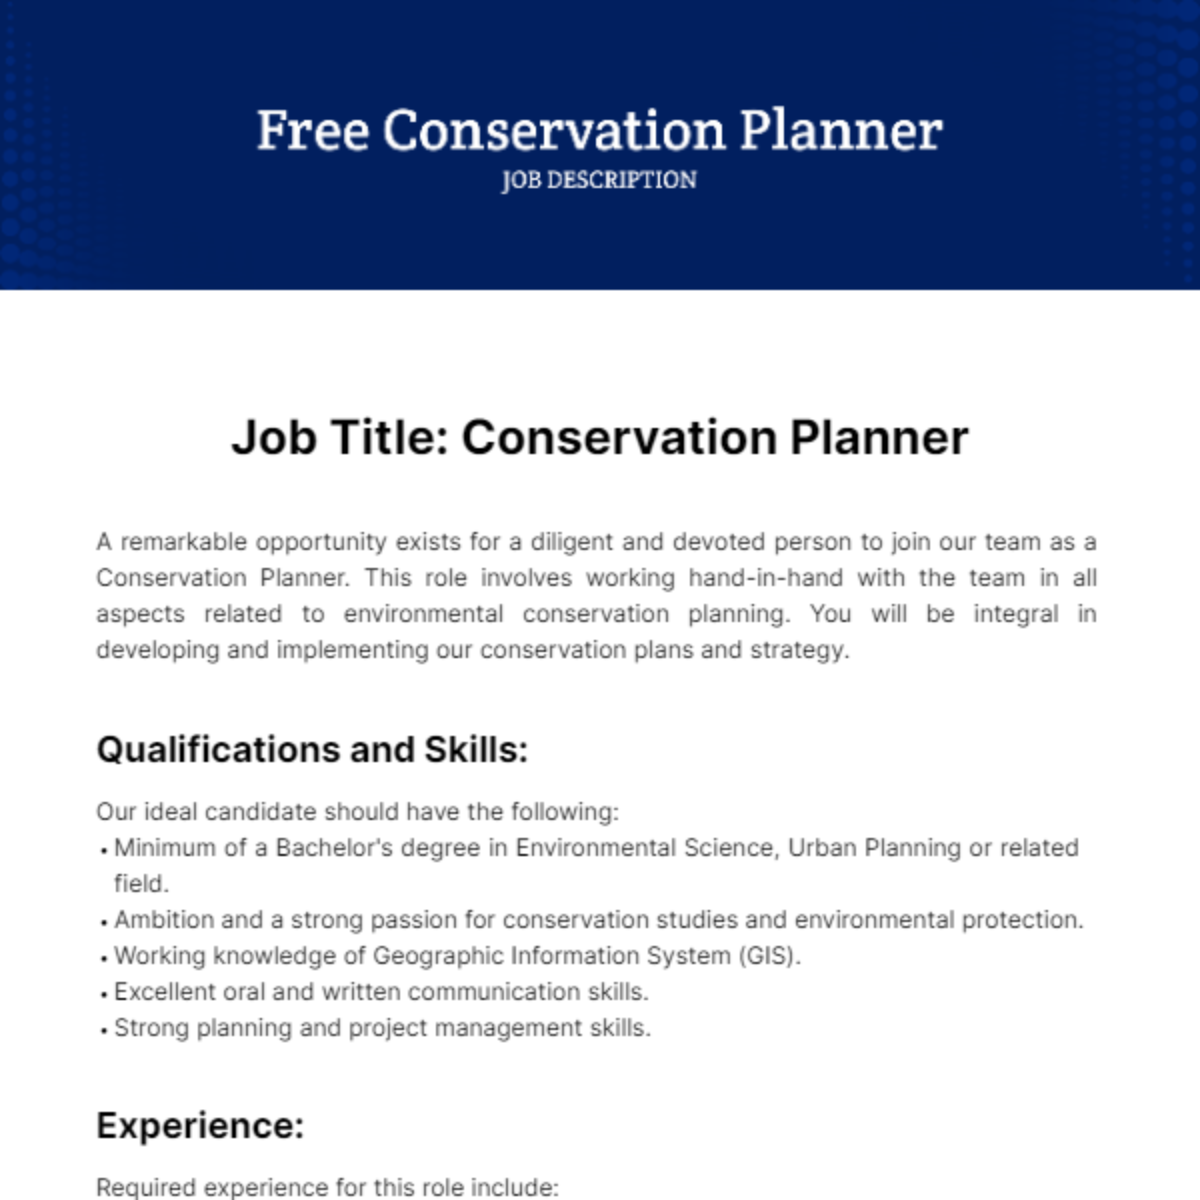 Free Conservation Planner Job Description Template